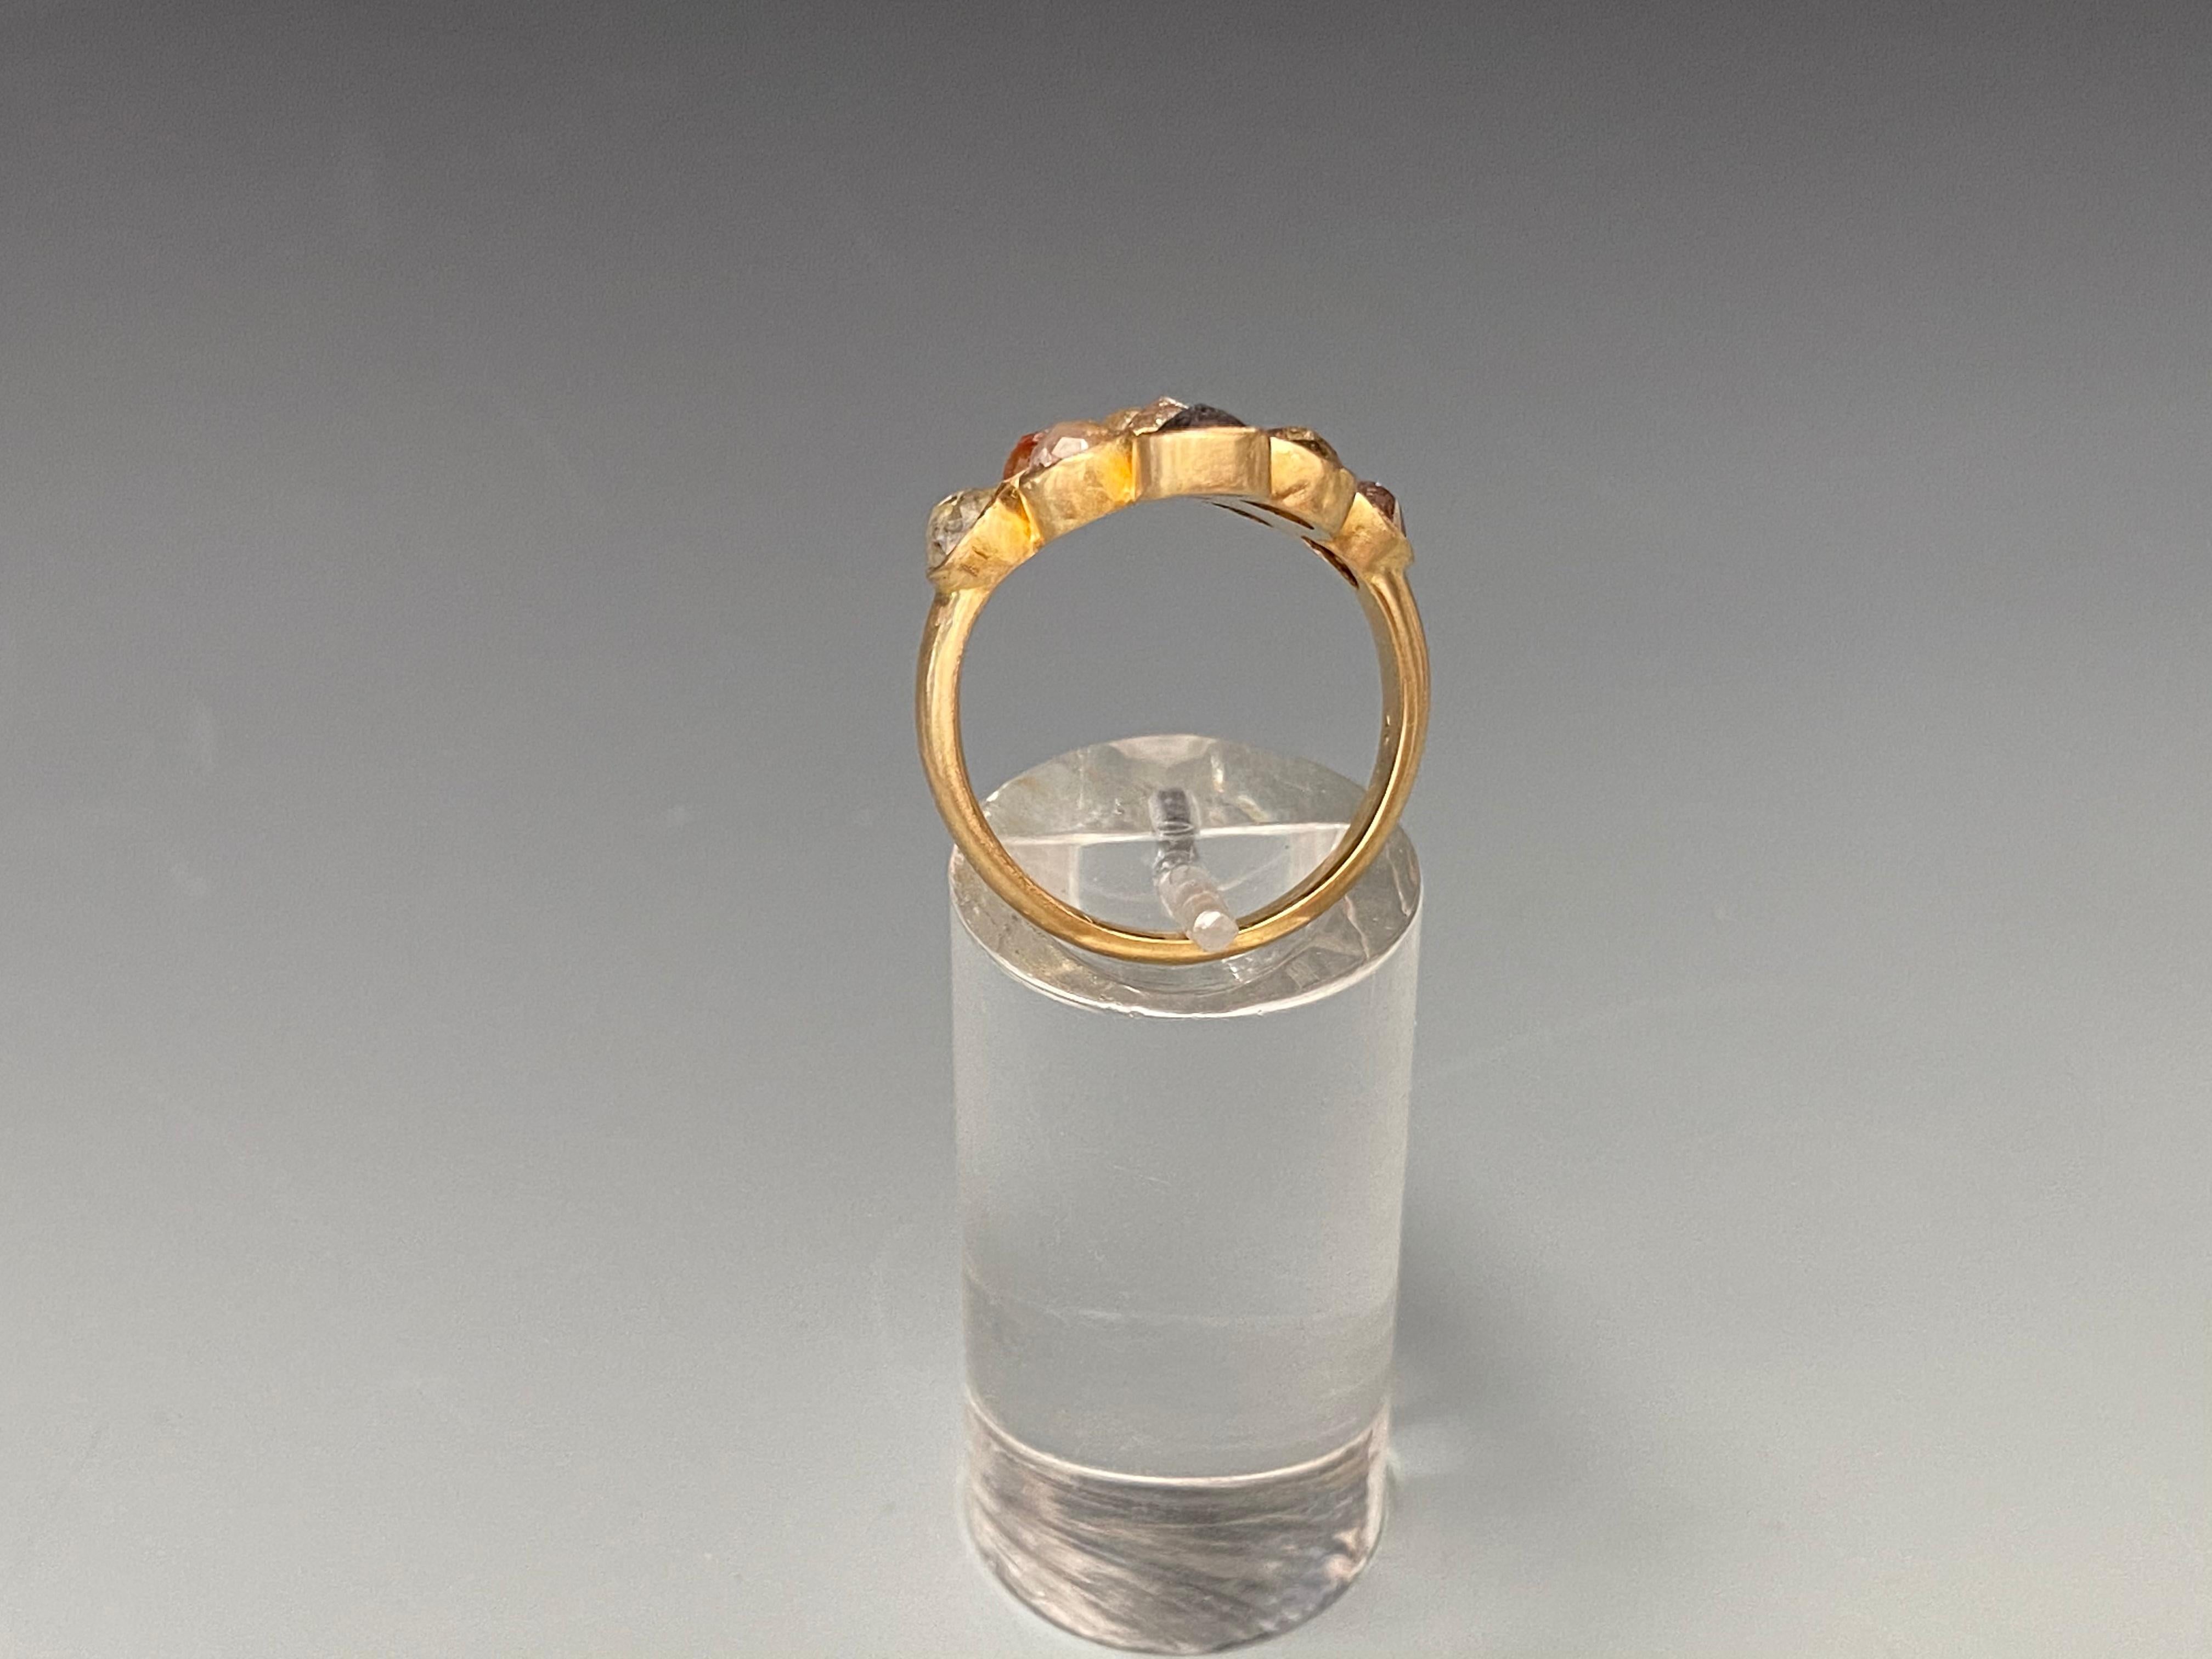 3.9 carat diamond ring